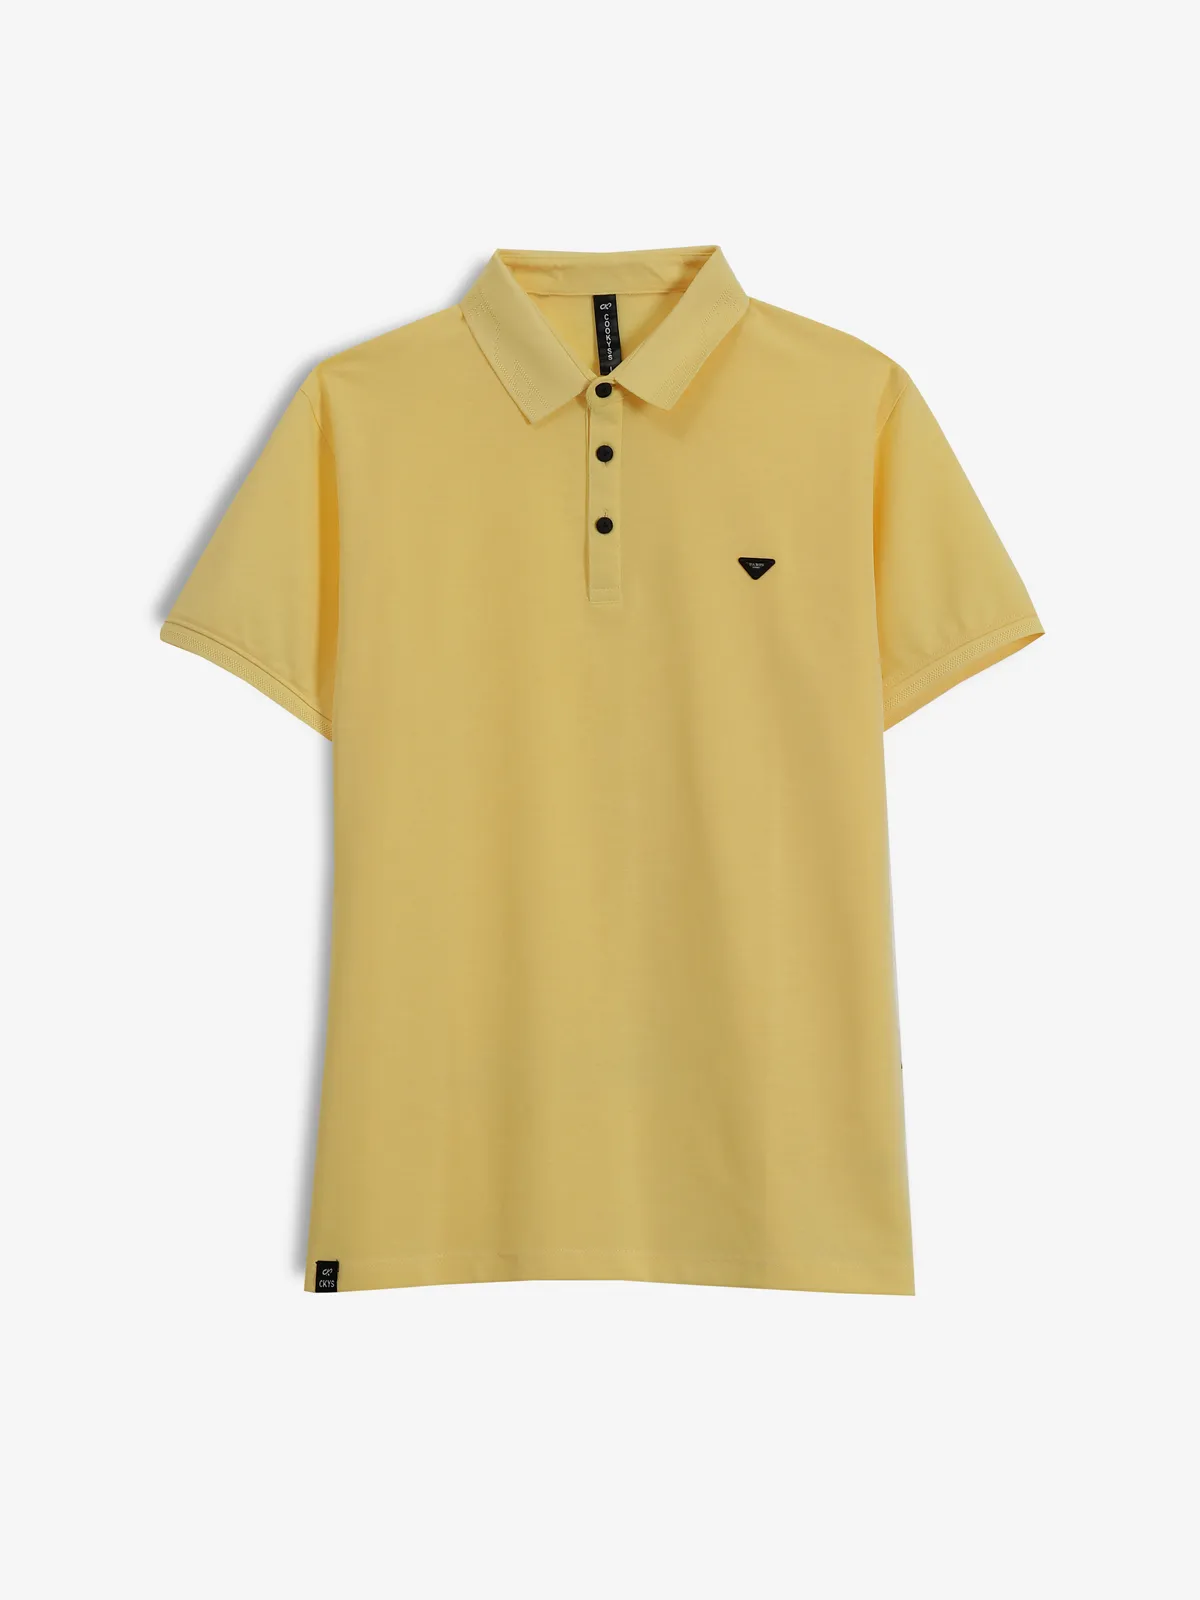 COOKYSS palin yellow cotton t-shirt